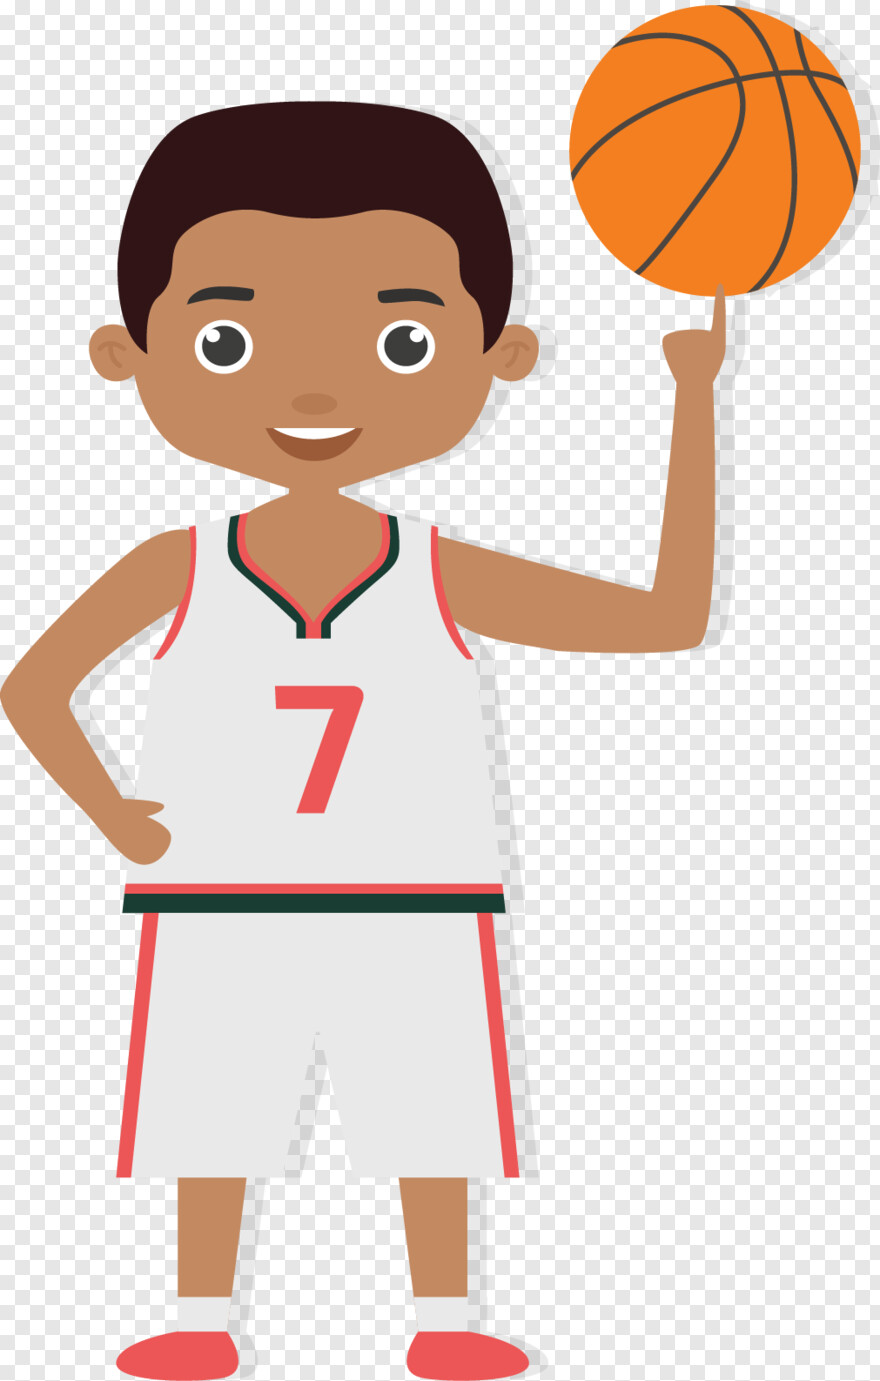 basketball-icon # 397015